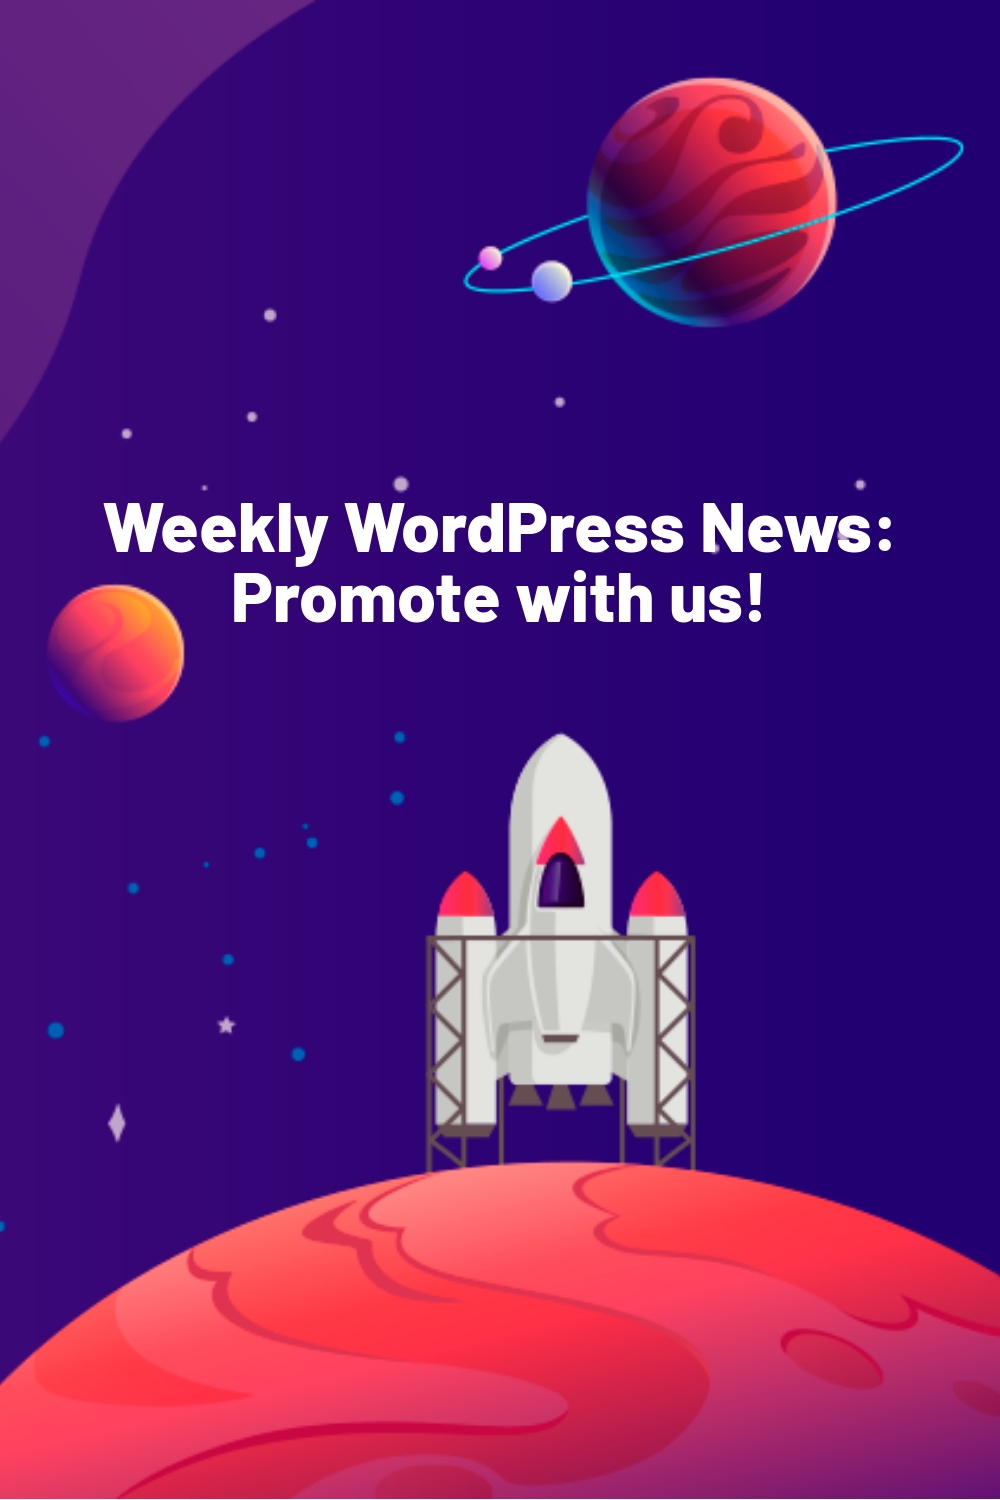 Weekly WordPress News:  Promote with us!